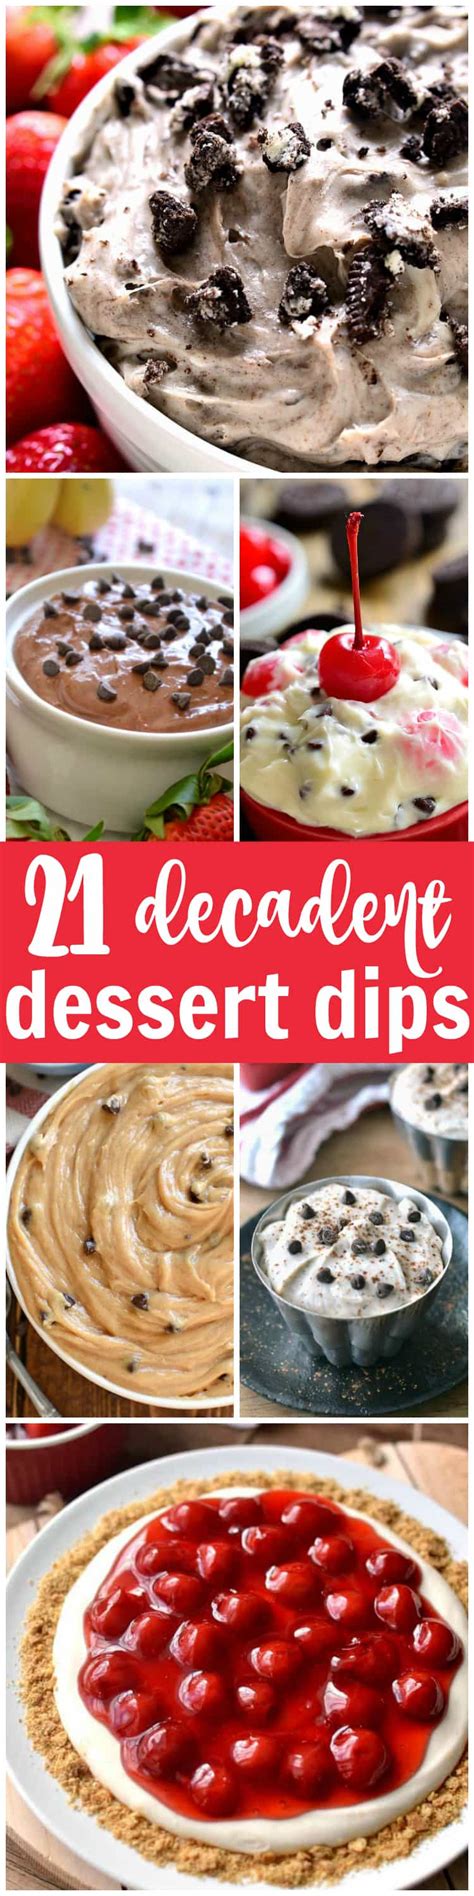 21 Decadent Dessert Dips Holiday Dessert Recipes Easy Favorite